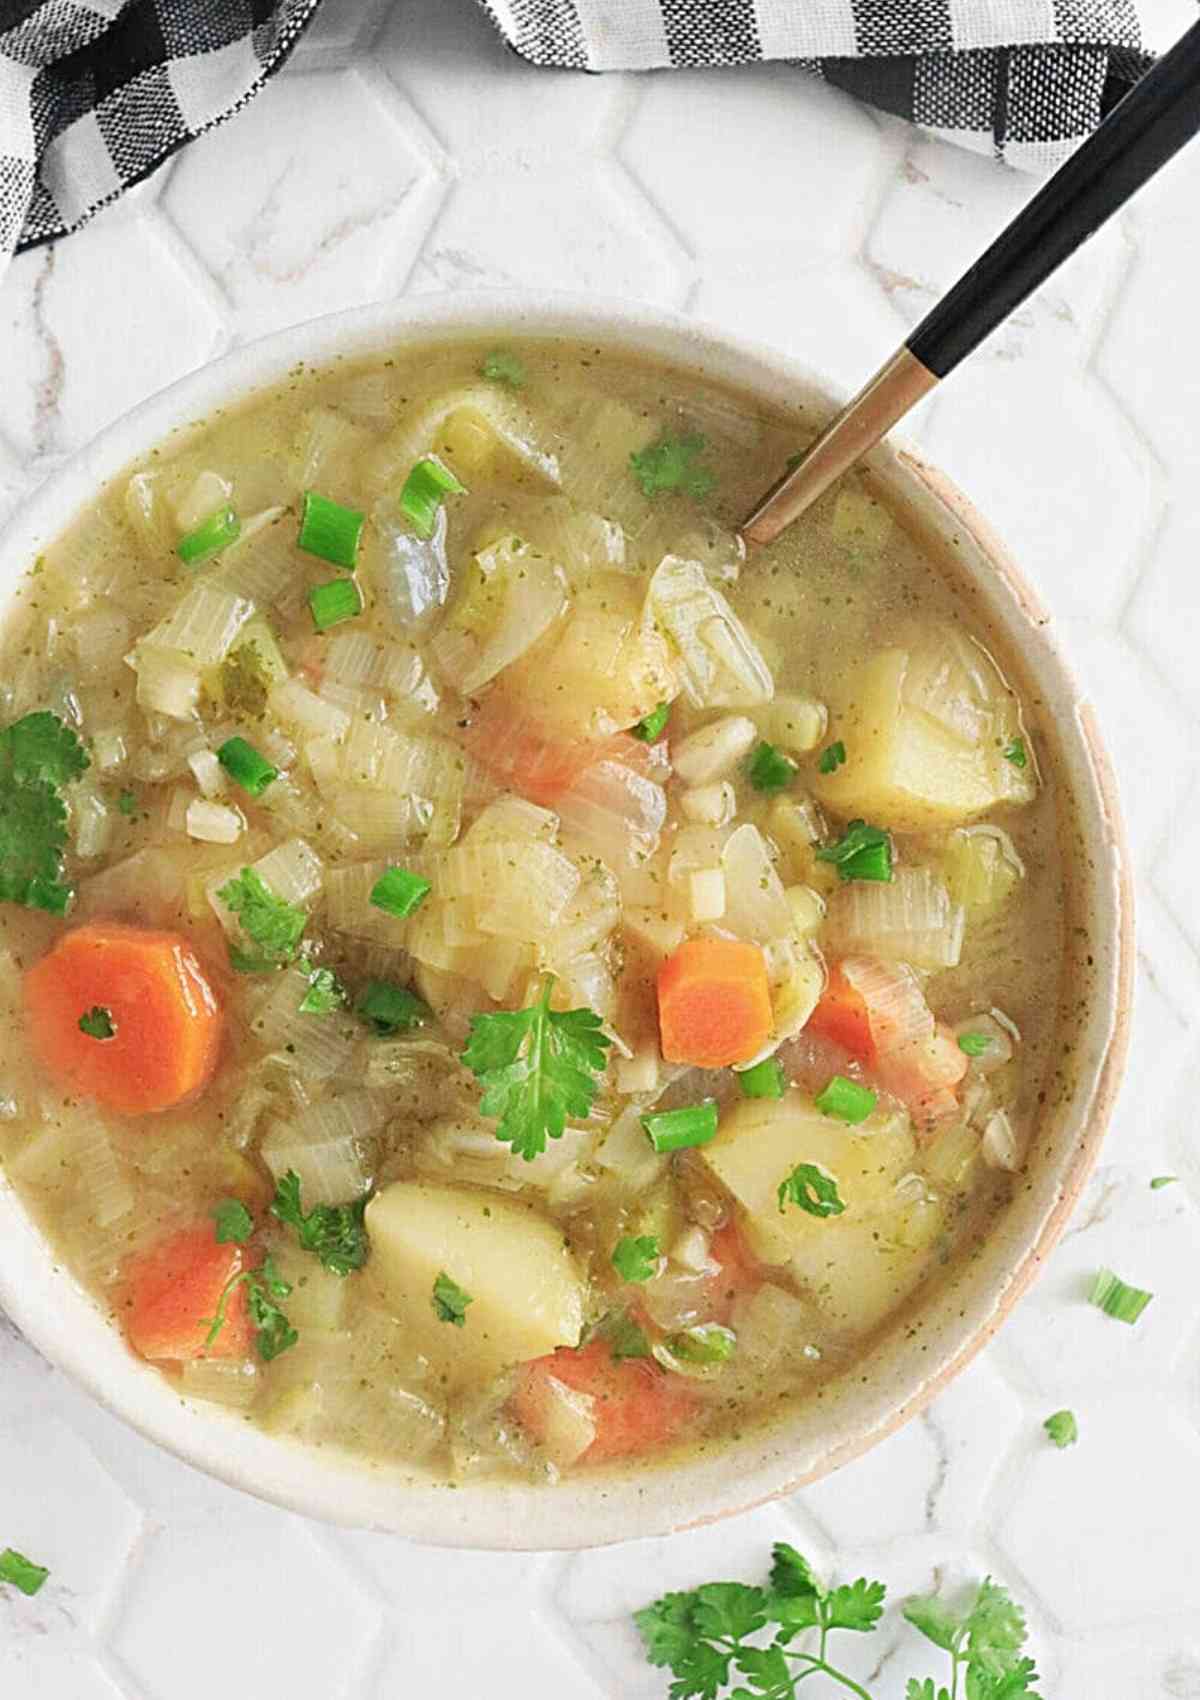  Potato Leek Soup with chunky vegetables